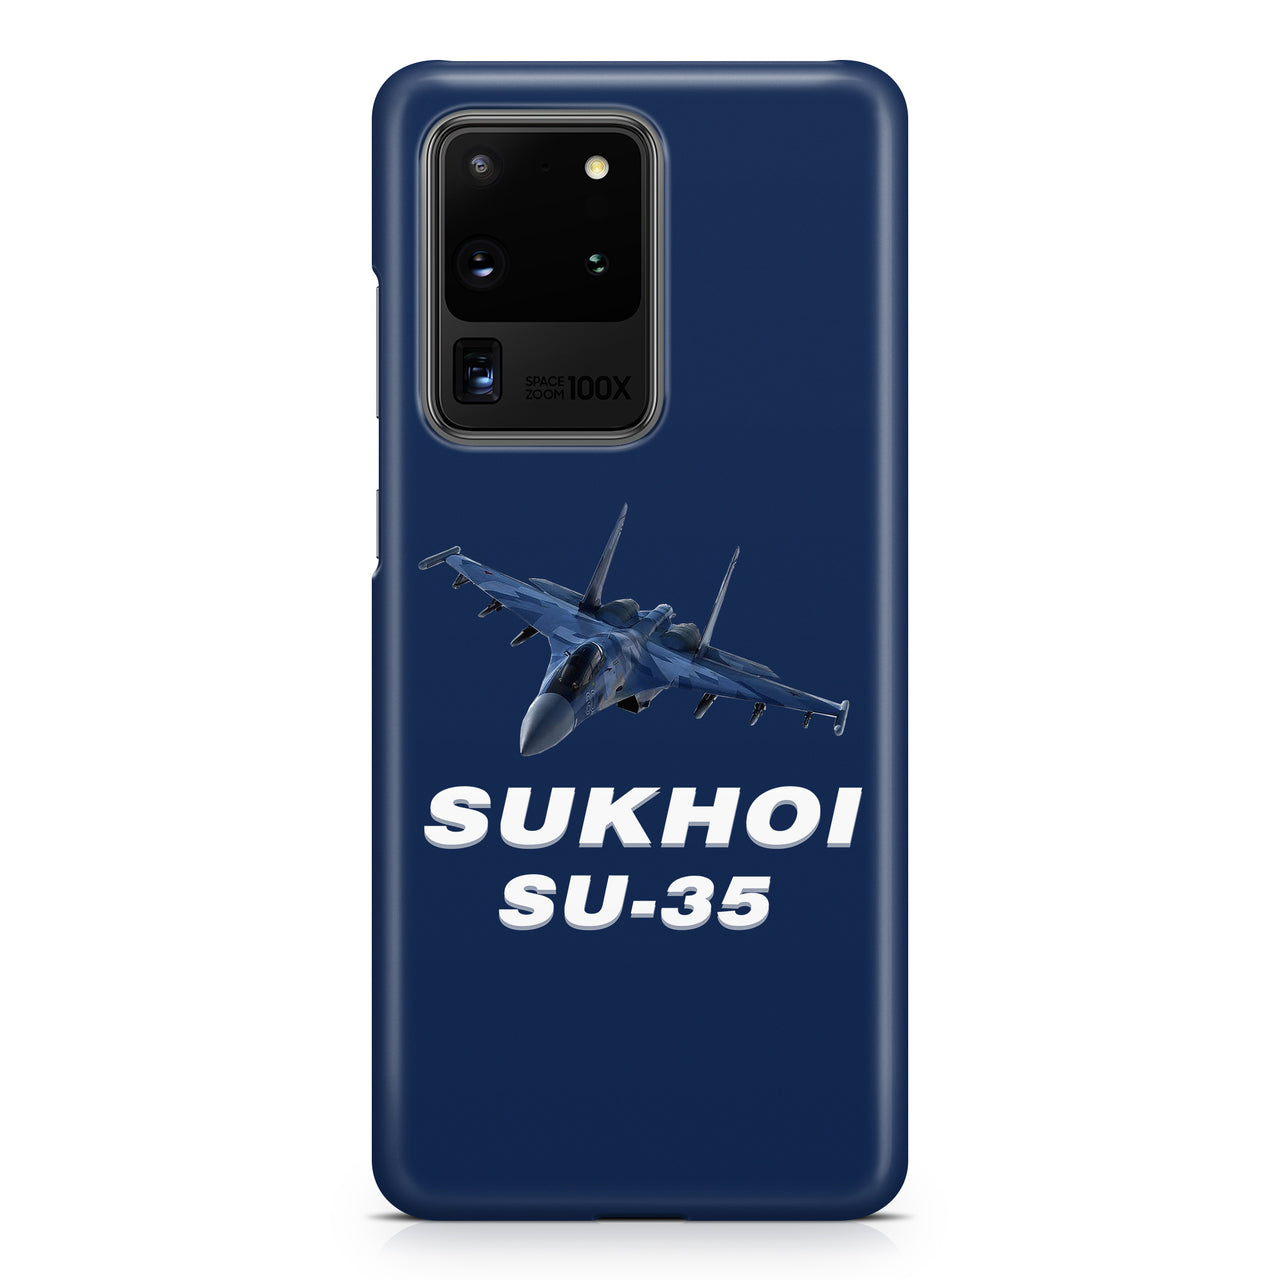 The Sukhoi SU-35 Samsung S & Note Cases